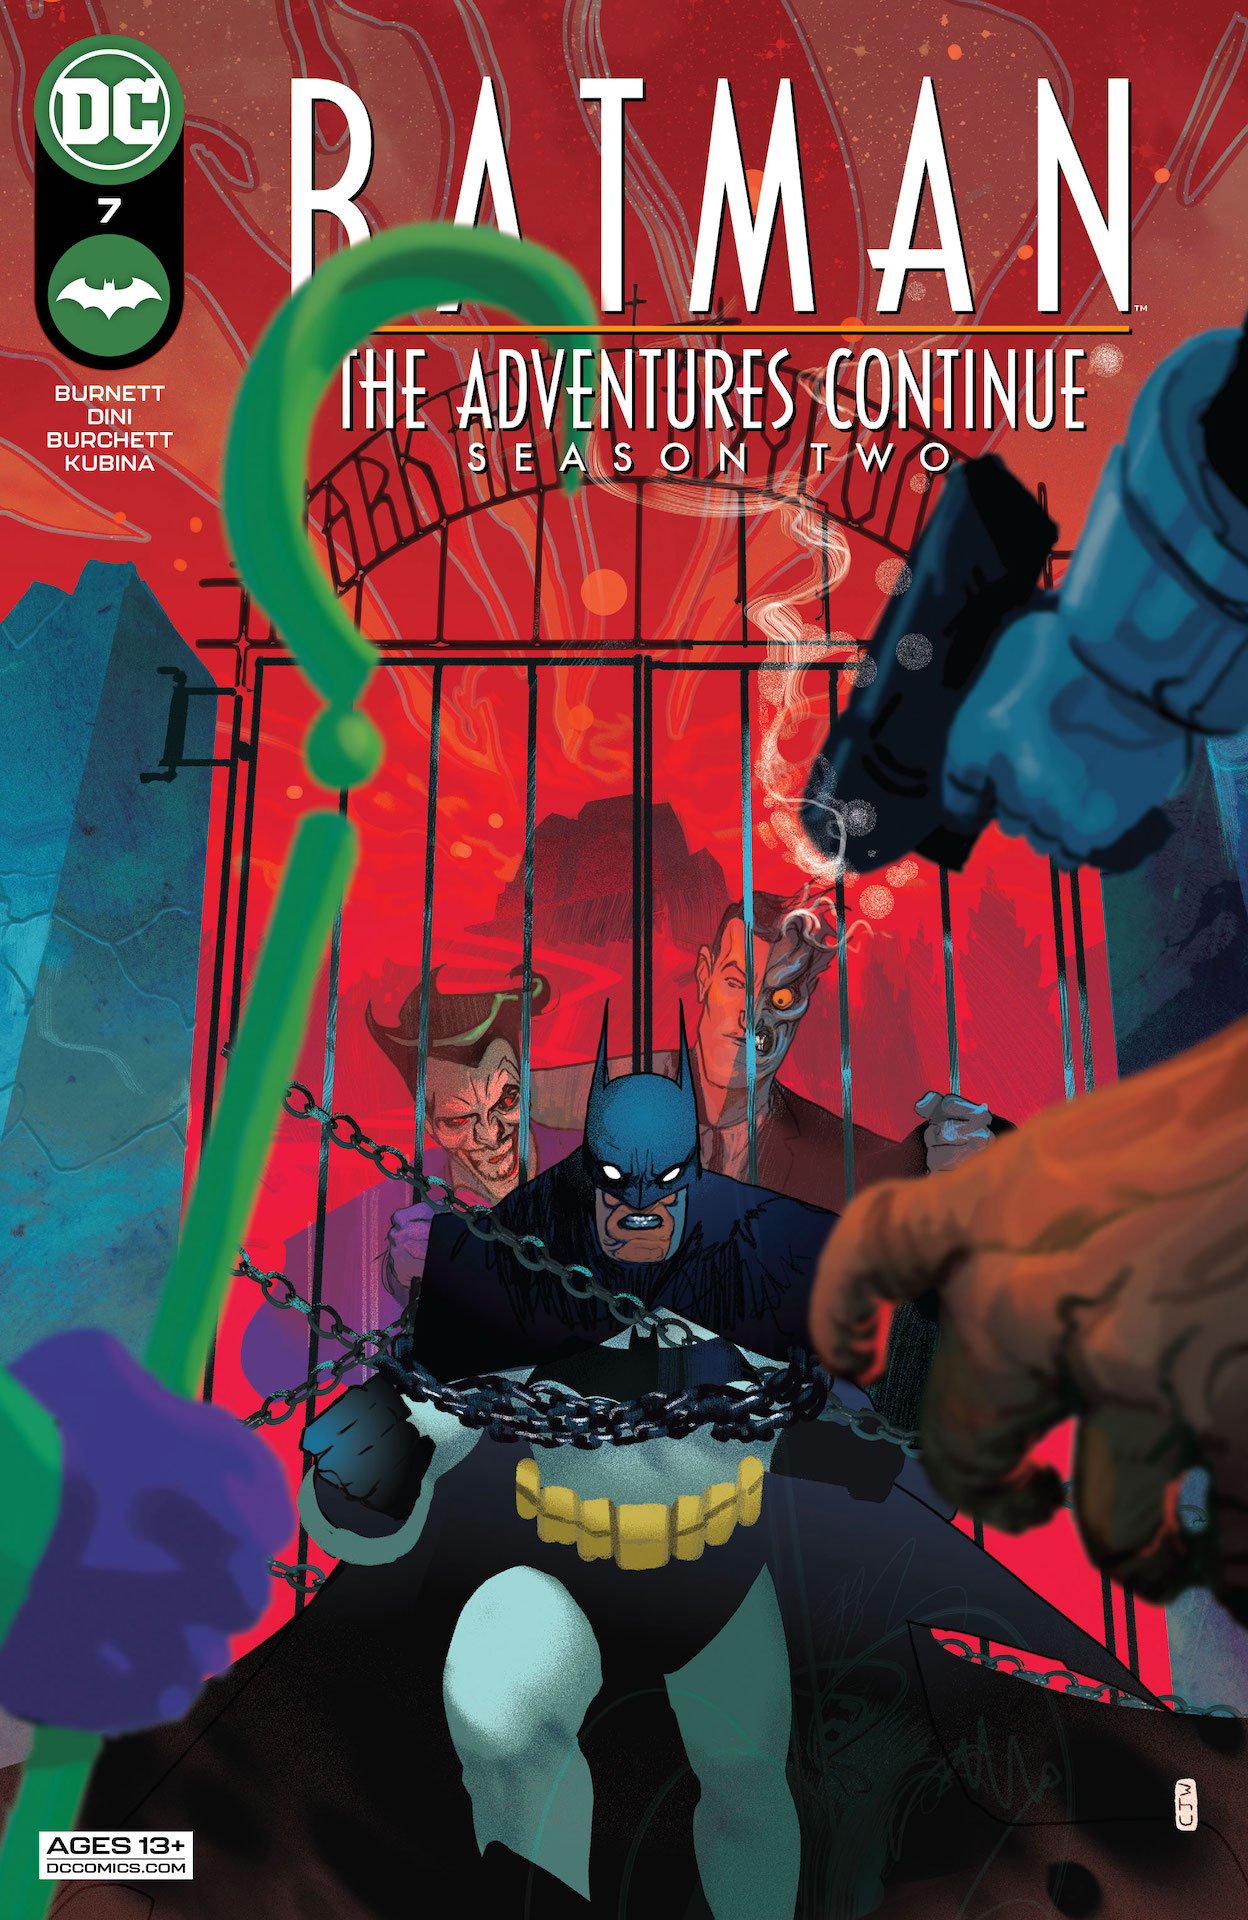 DC Preview: Batman: The Adventures Continue Season Two #7